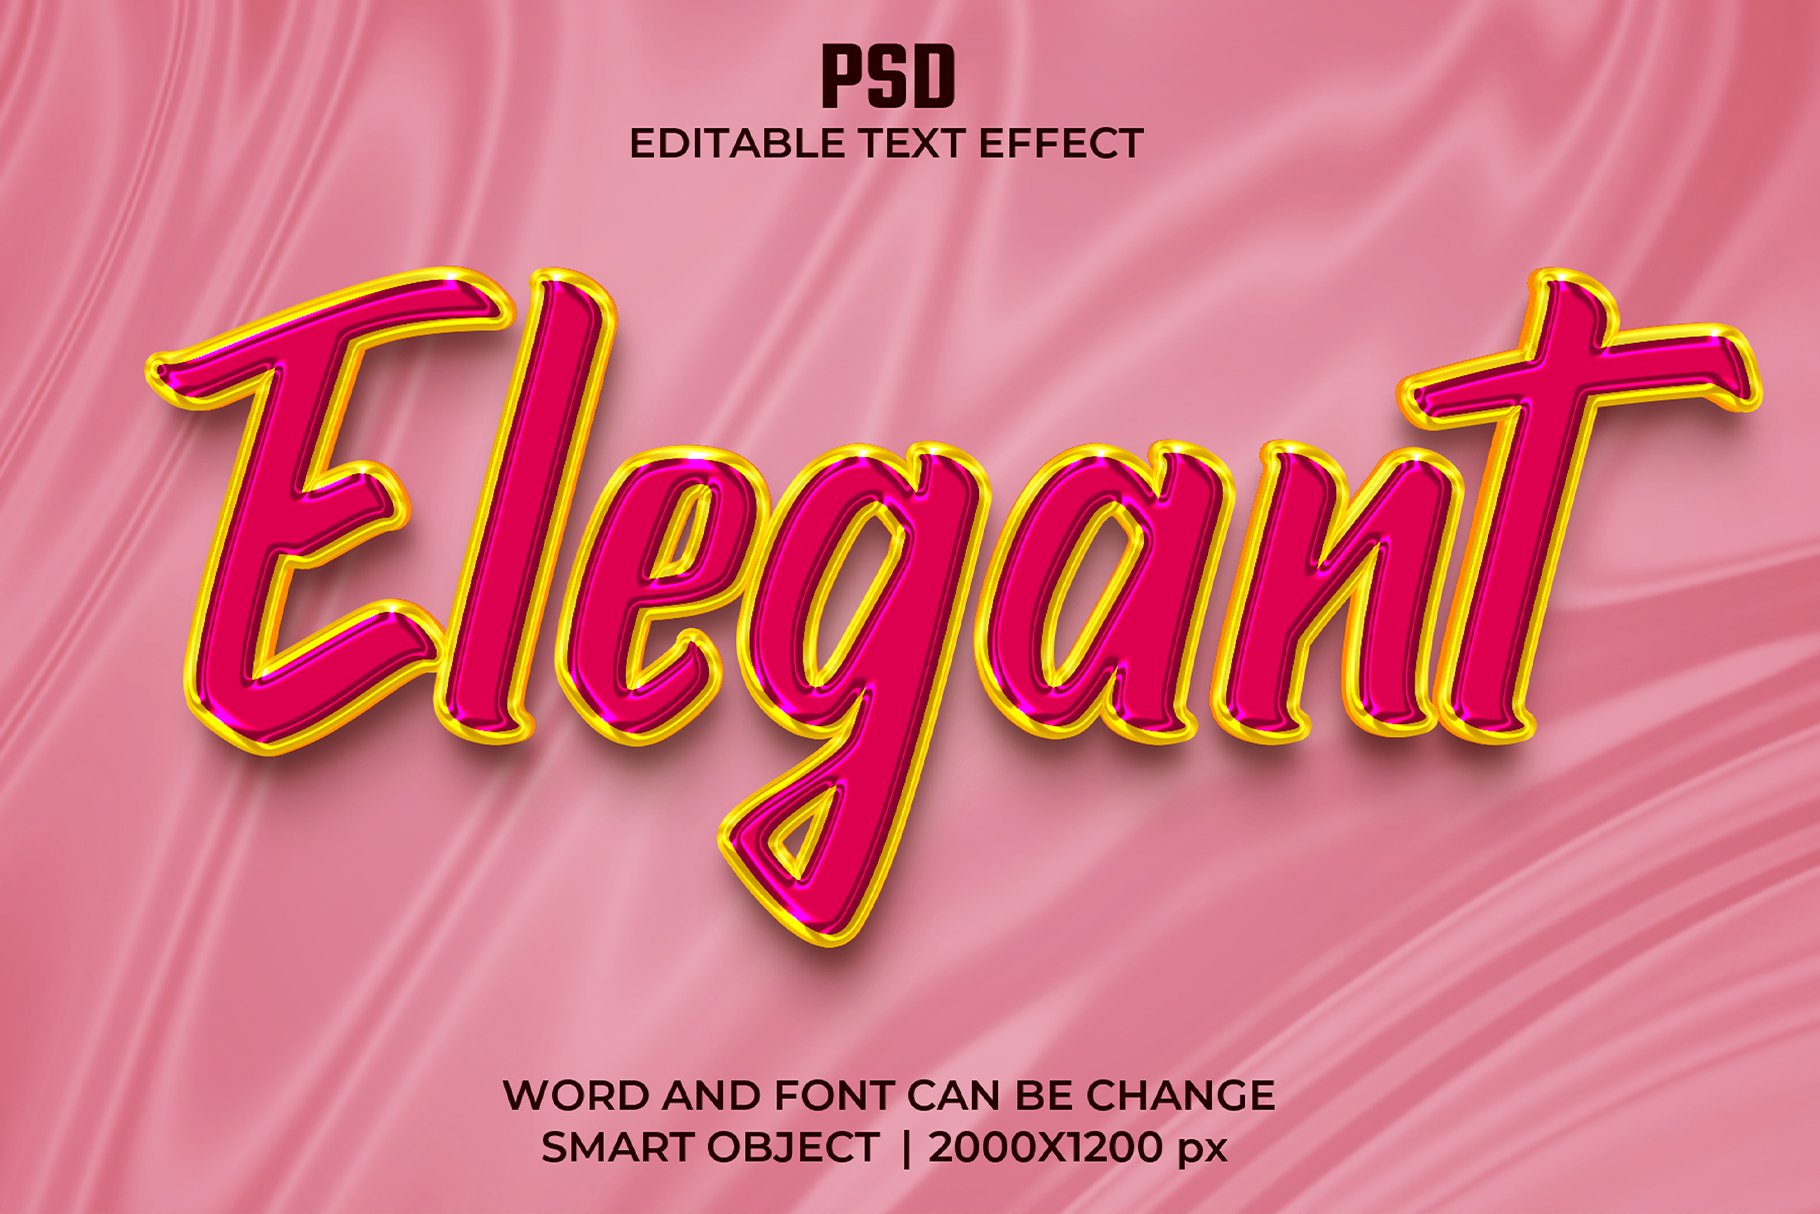 Elegant 3d Editable Psd Text Effectcover image.